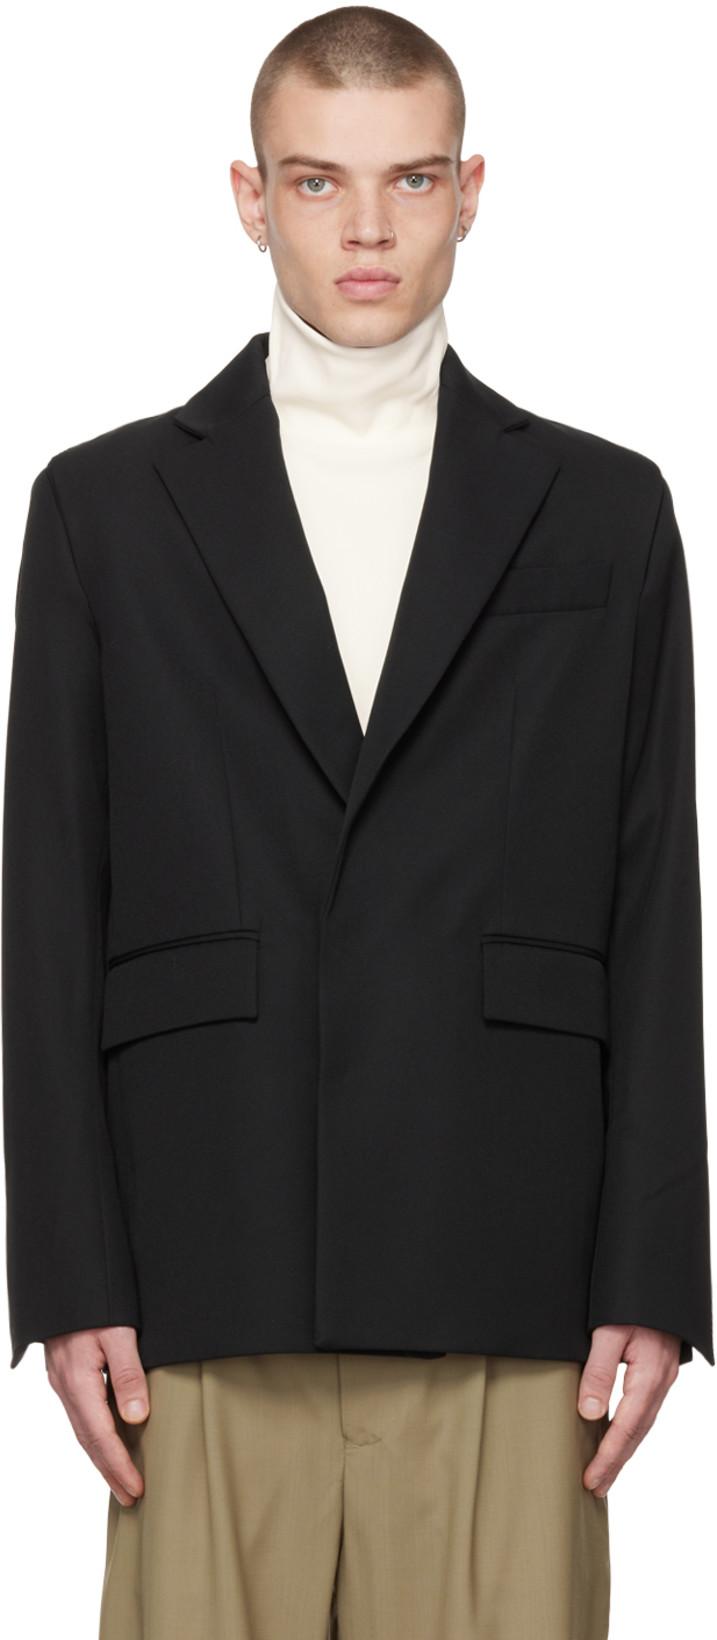 Black Cone Suit Jacket Blazer by BIANCA SAUNDERS